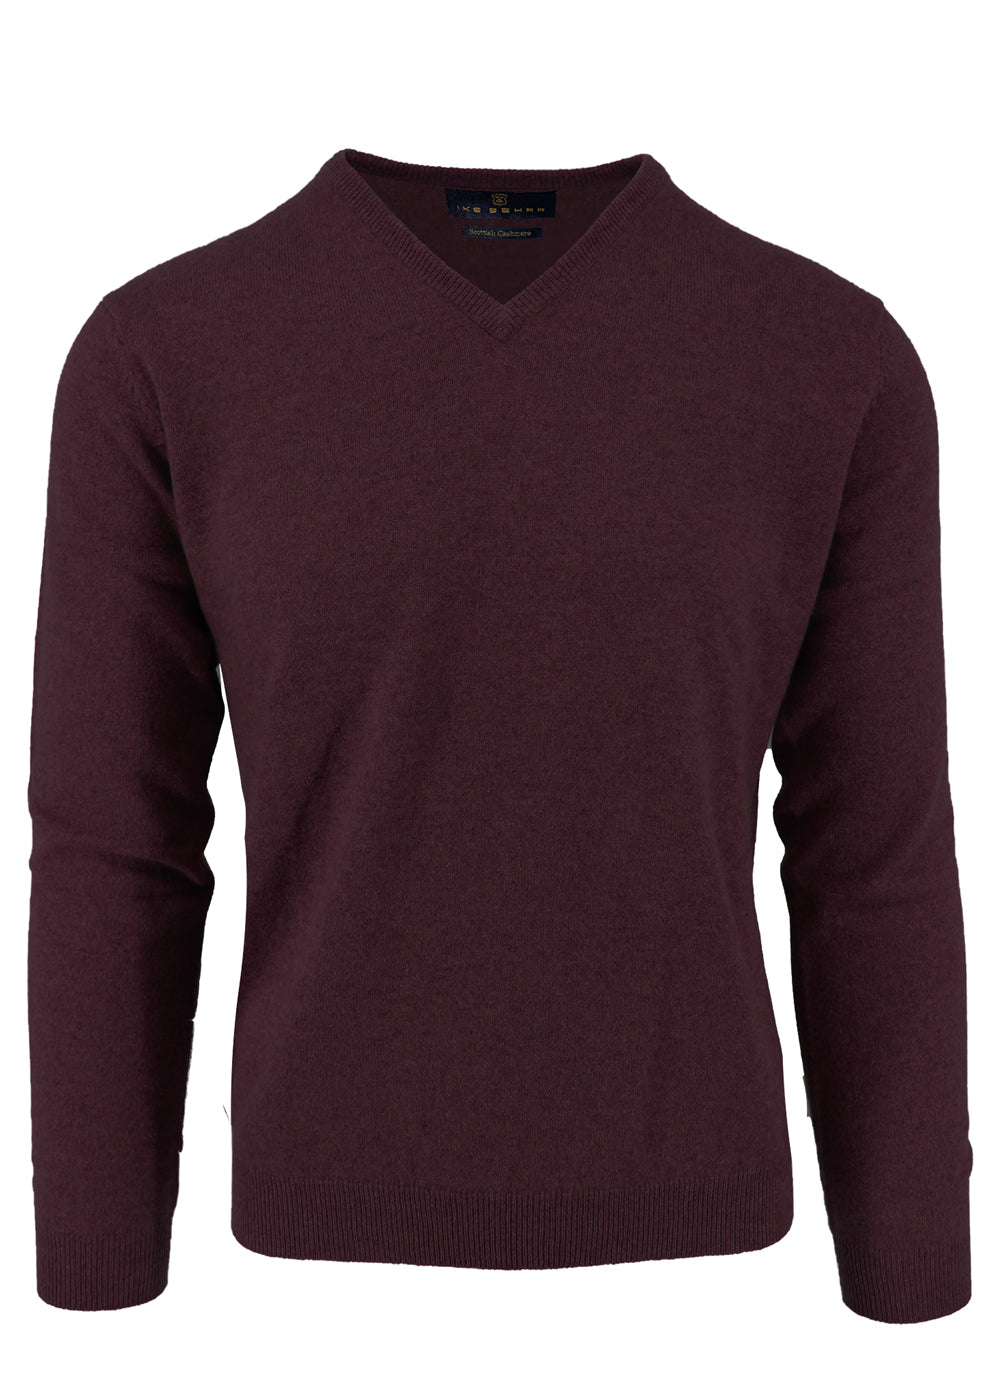 Burgandy V-Neck Cashmere Sweater